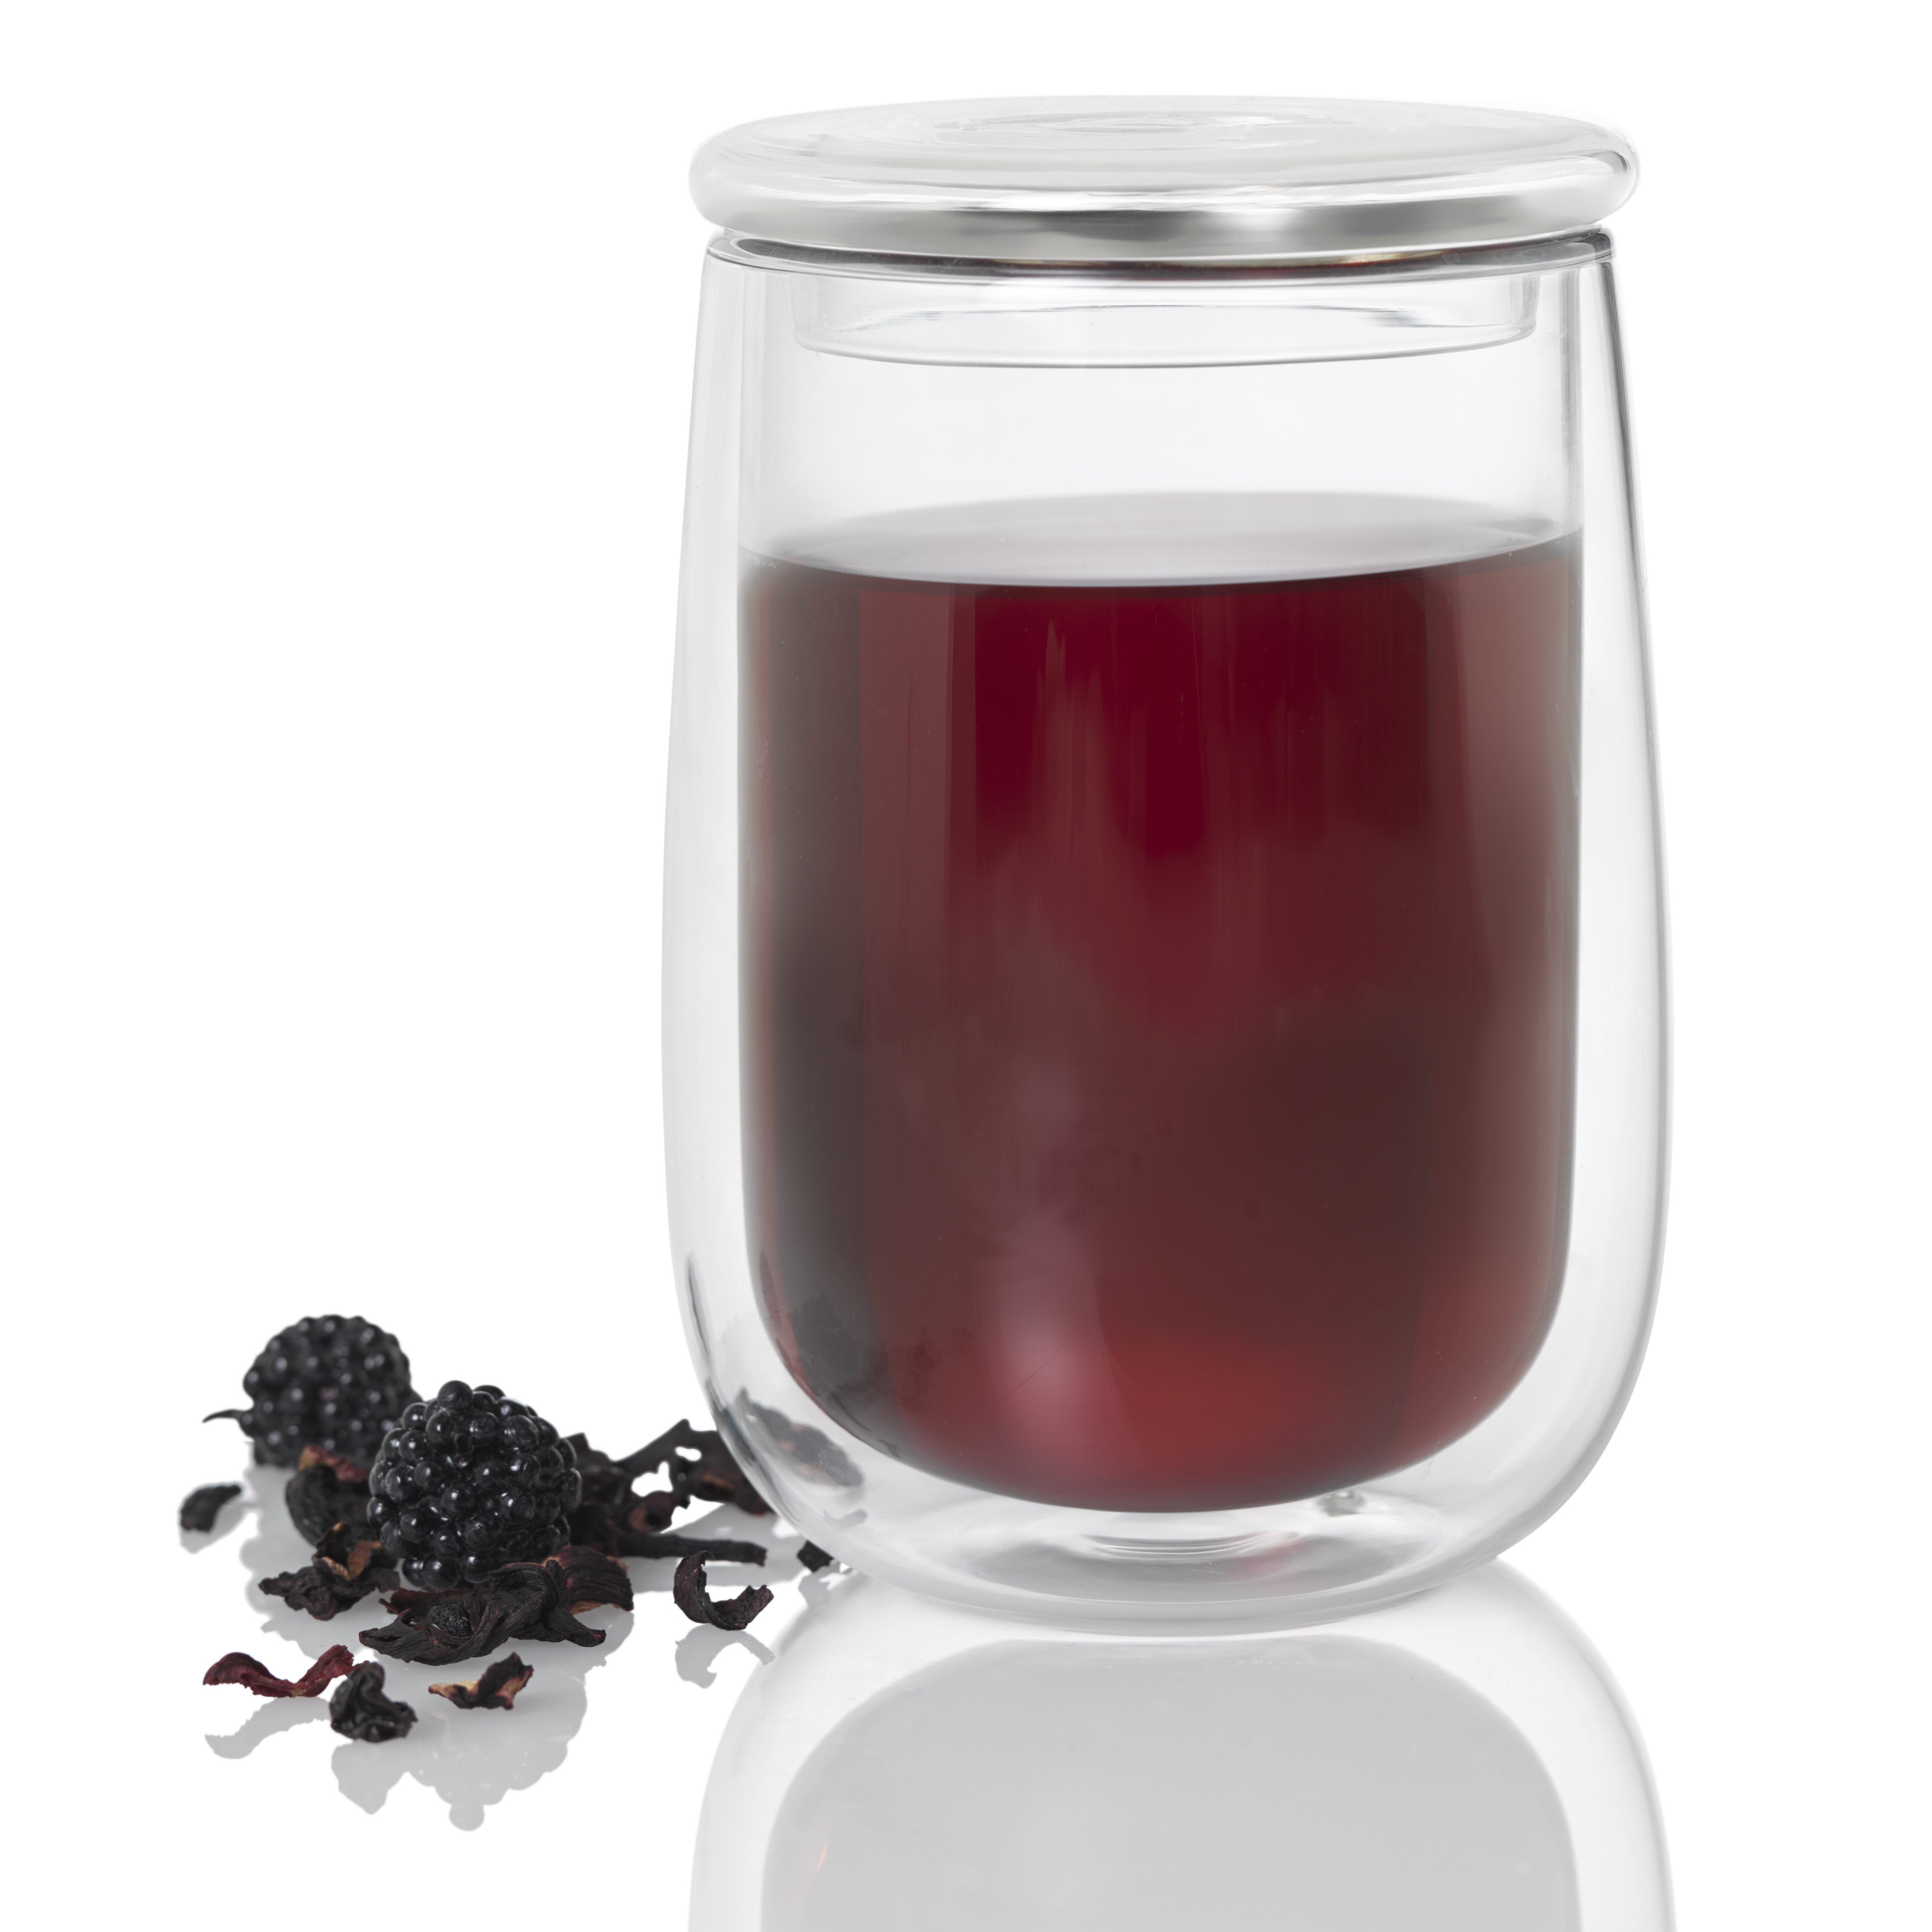 2er Tee Edelstahlfilter Teeglas mit Set Fusion doppelwandiges losen für AdHoc Glass, Borosilikatglas,